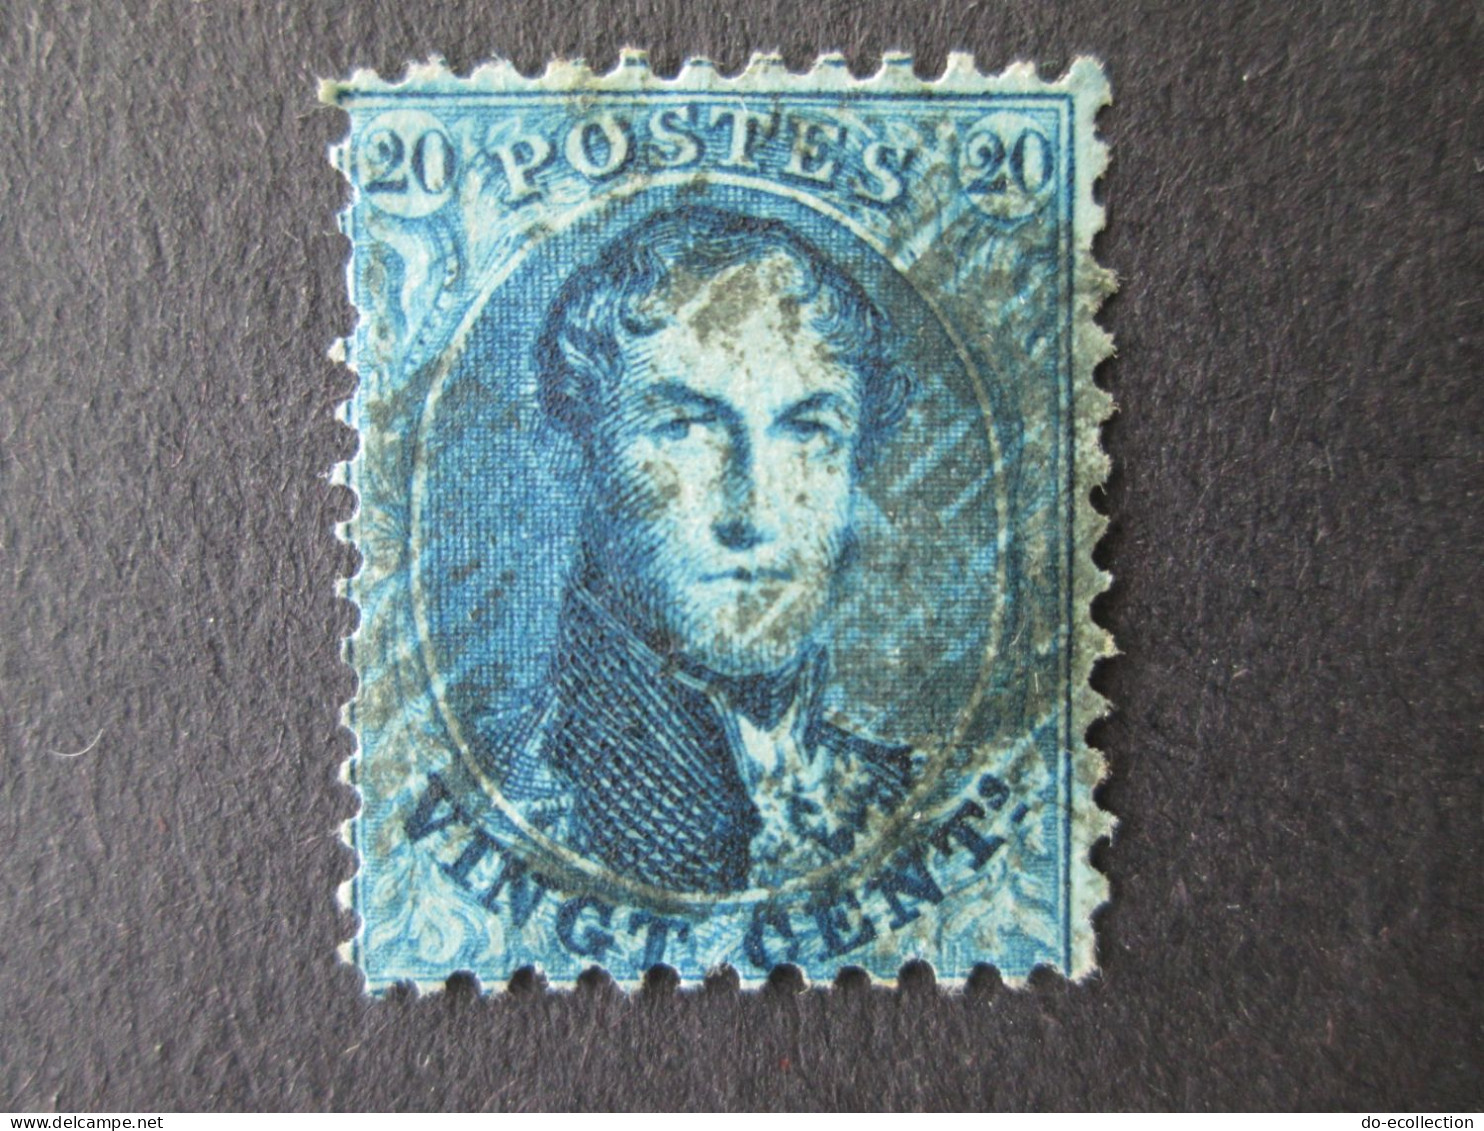 BELGIQUE 1863 lot de 6 timbres 10c 20c perf 12 1/2 x 13 1/2 Leopold I dont obl 24/60/144 Belgie Belgium timbre stamps